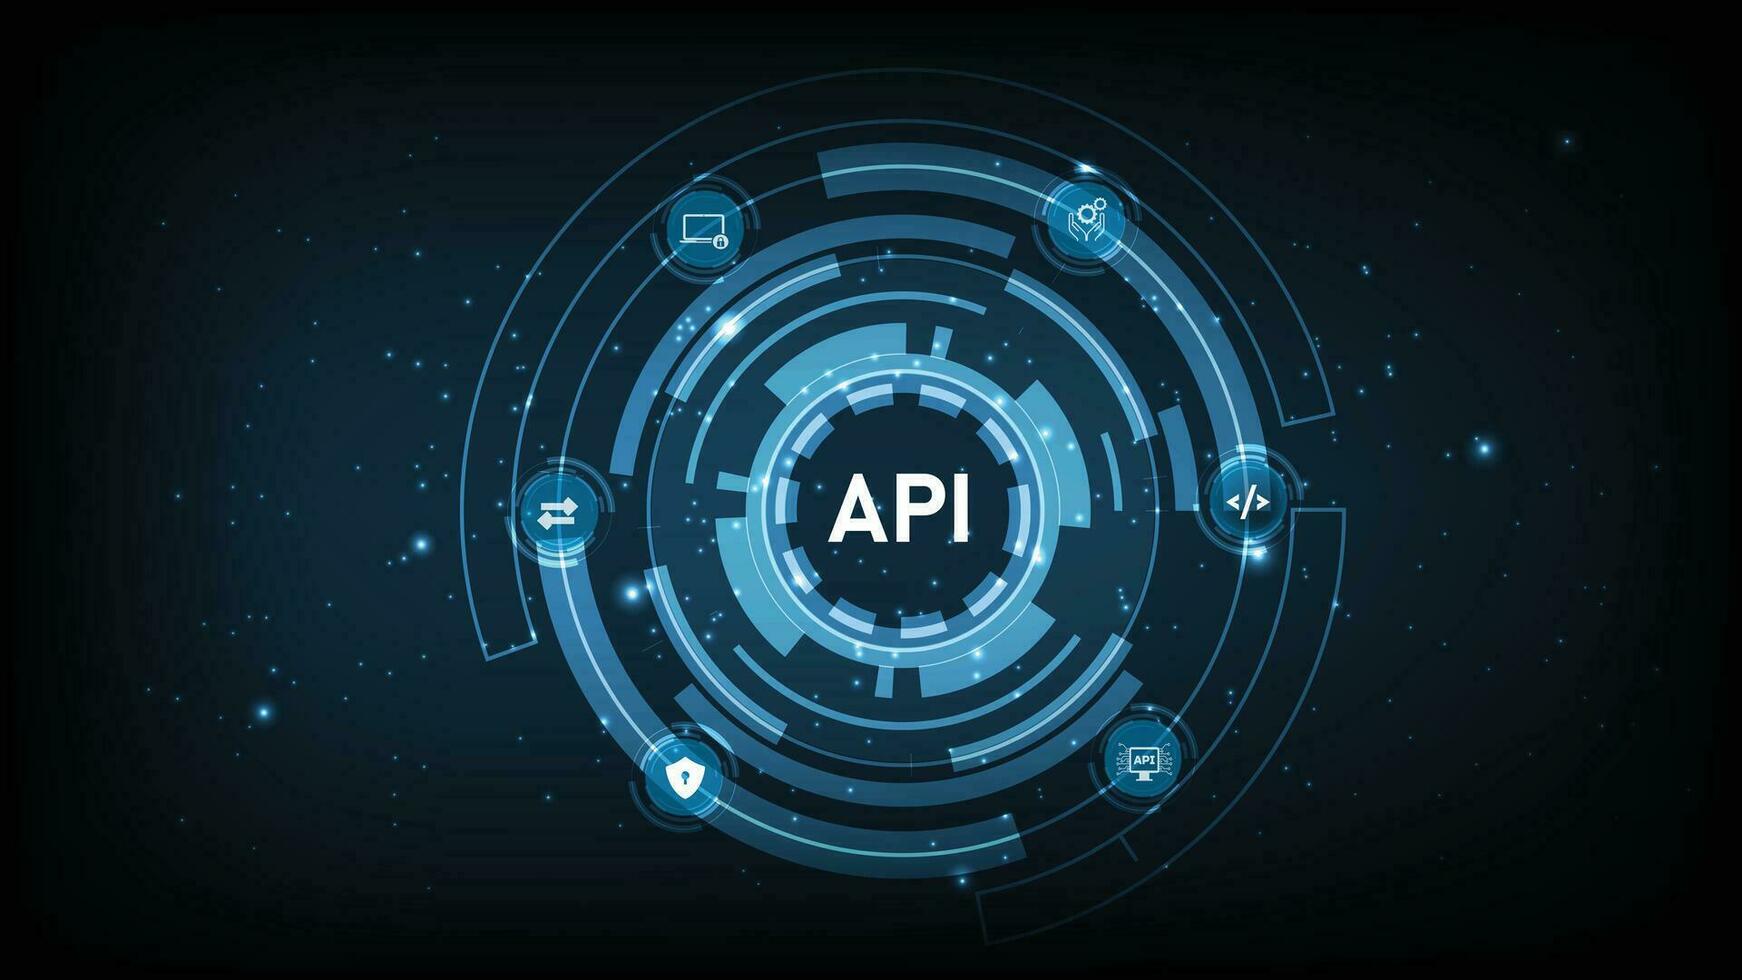 solicitud programación interfaz API. software desarrollo herramientas, información tecnología, moderno tecnología, Internet, y redes conceptos en un oscuro azul antecedentes. vector